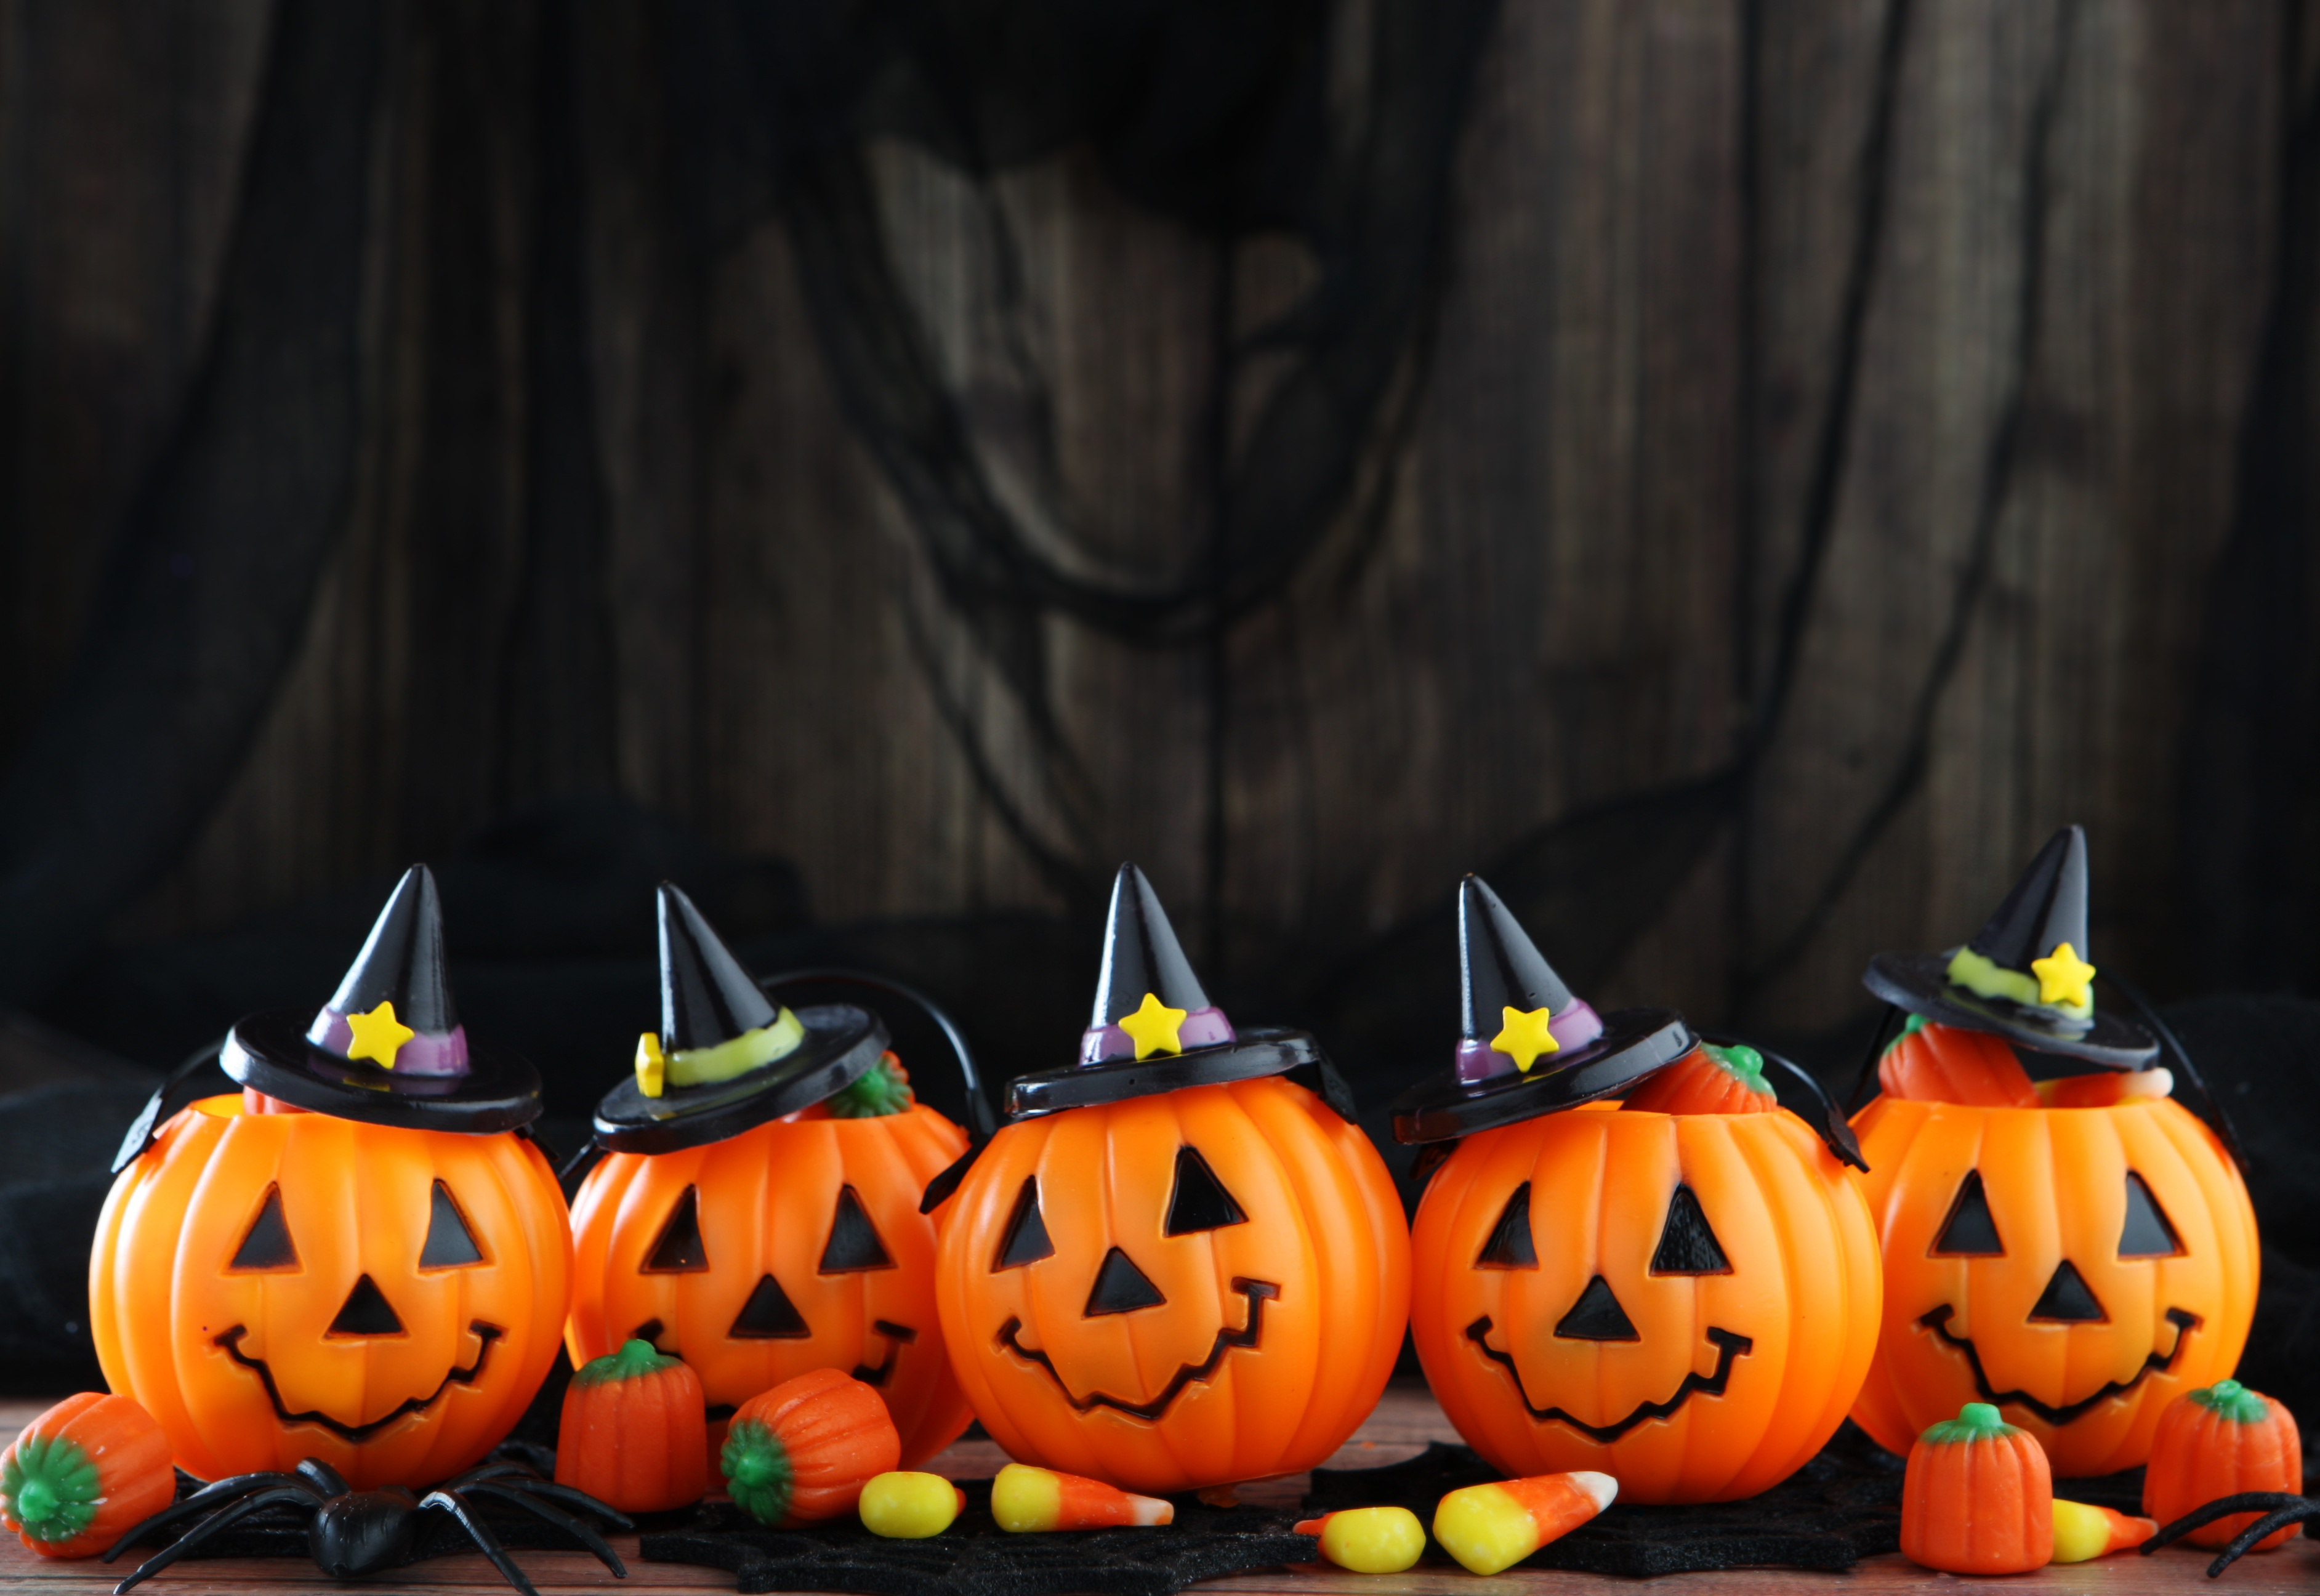 Download mobile wallpaper Halloween, Holiday, Jack O' Lantern for free.